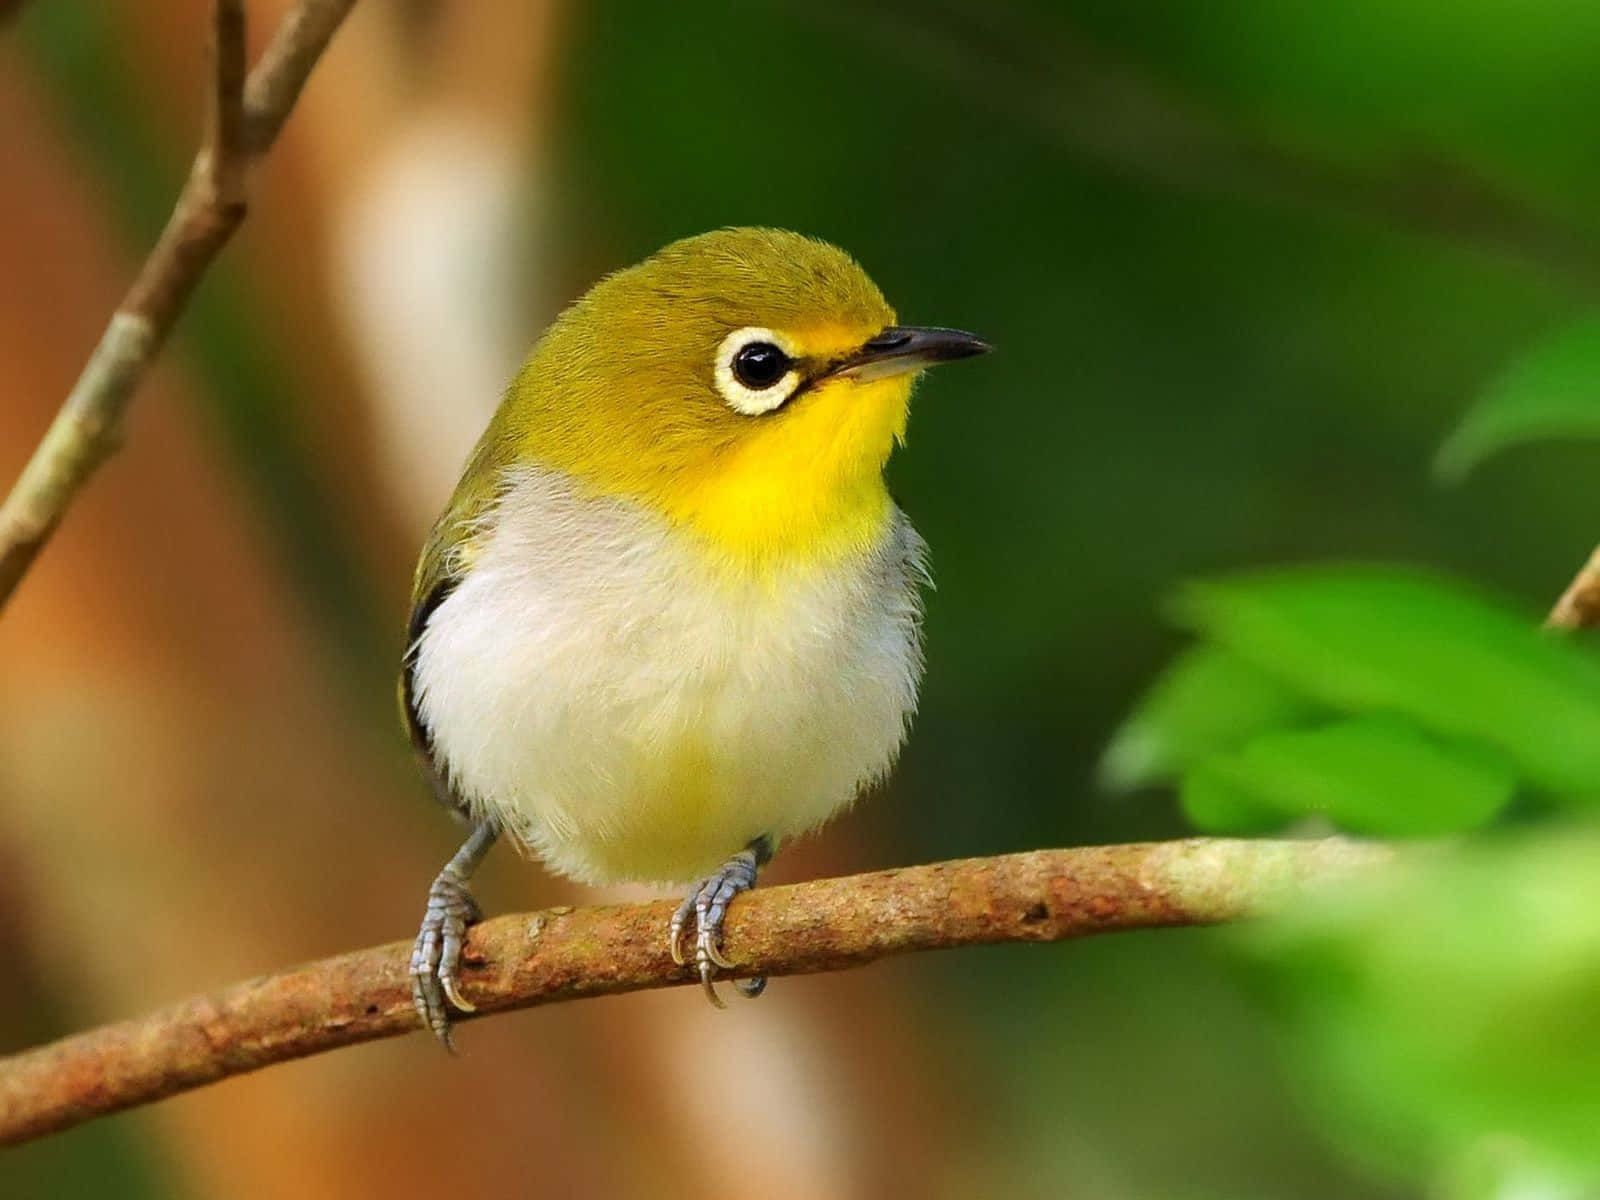 A Cute Little Bird Sitting Content in Nature